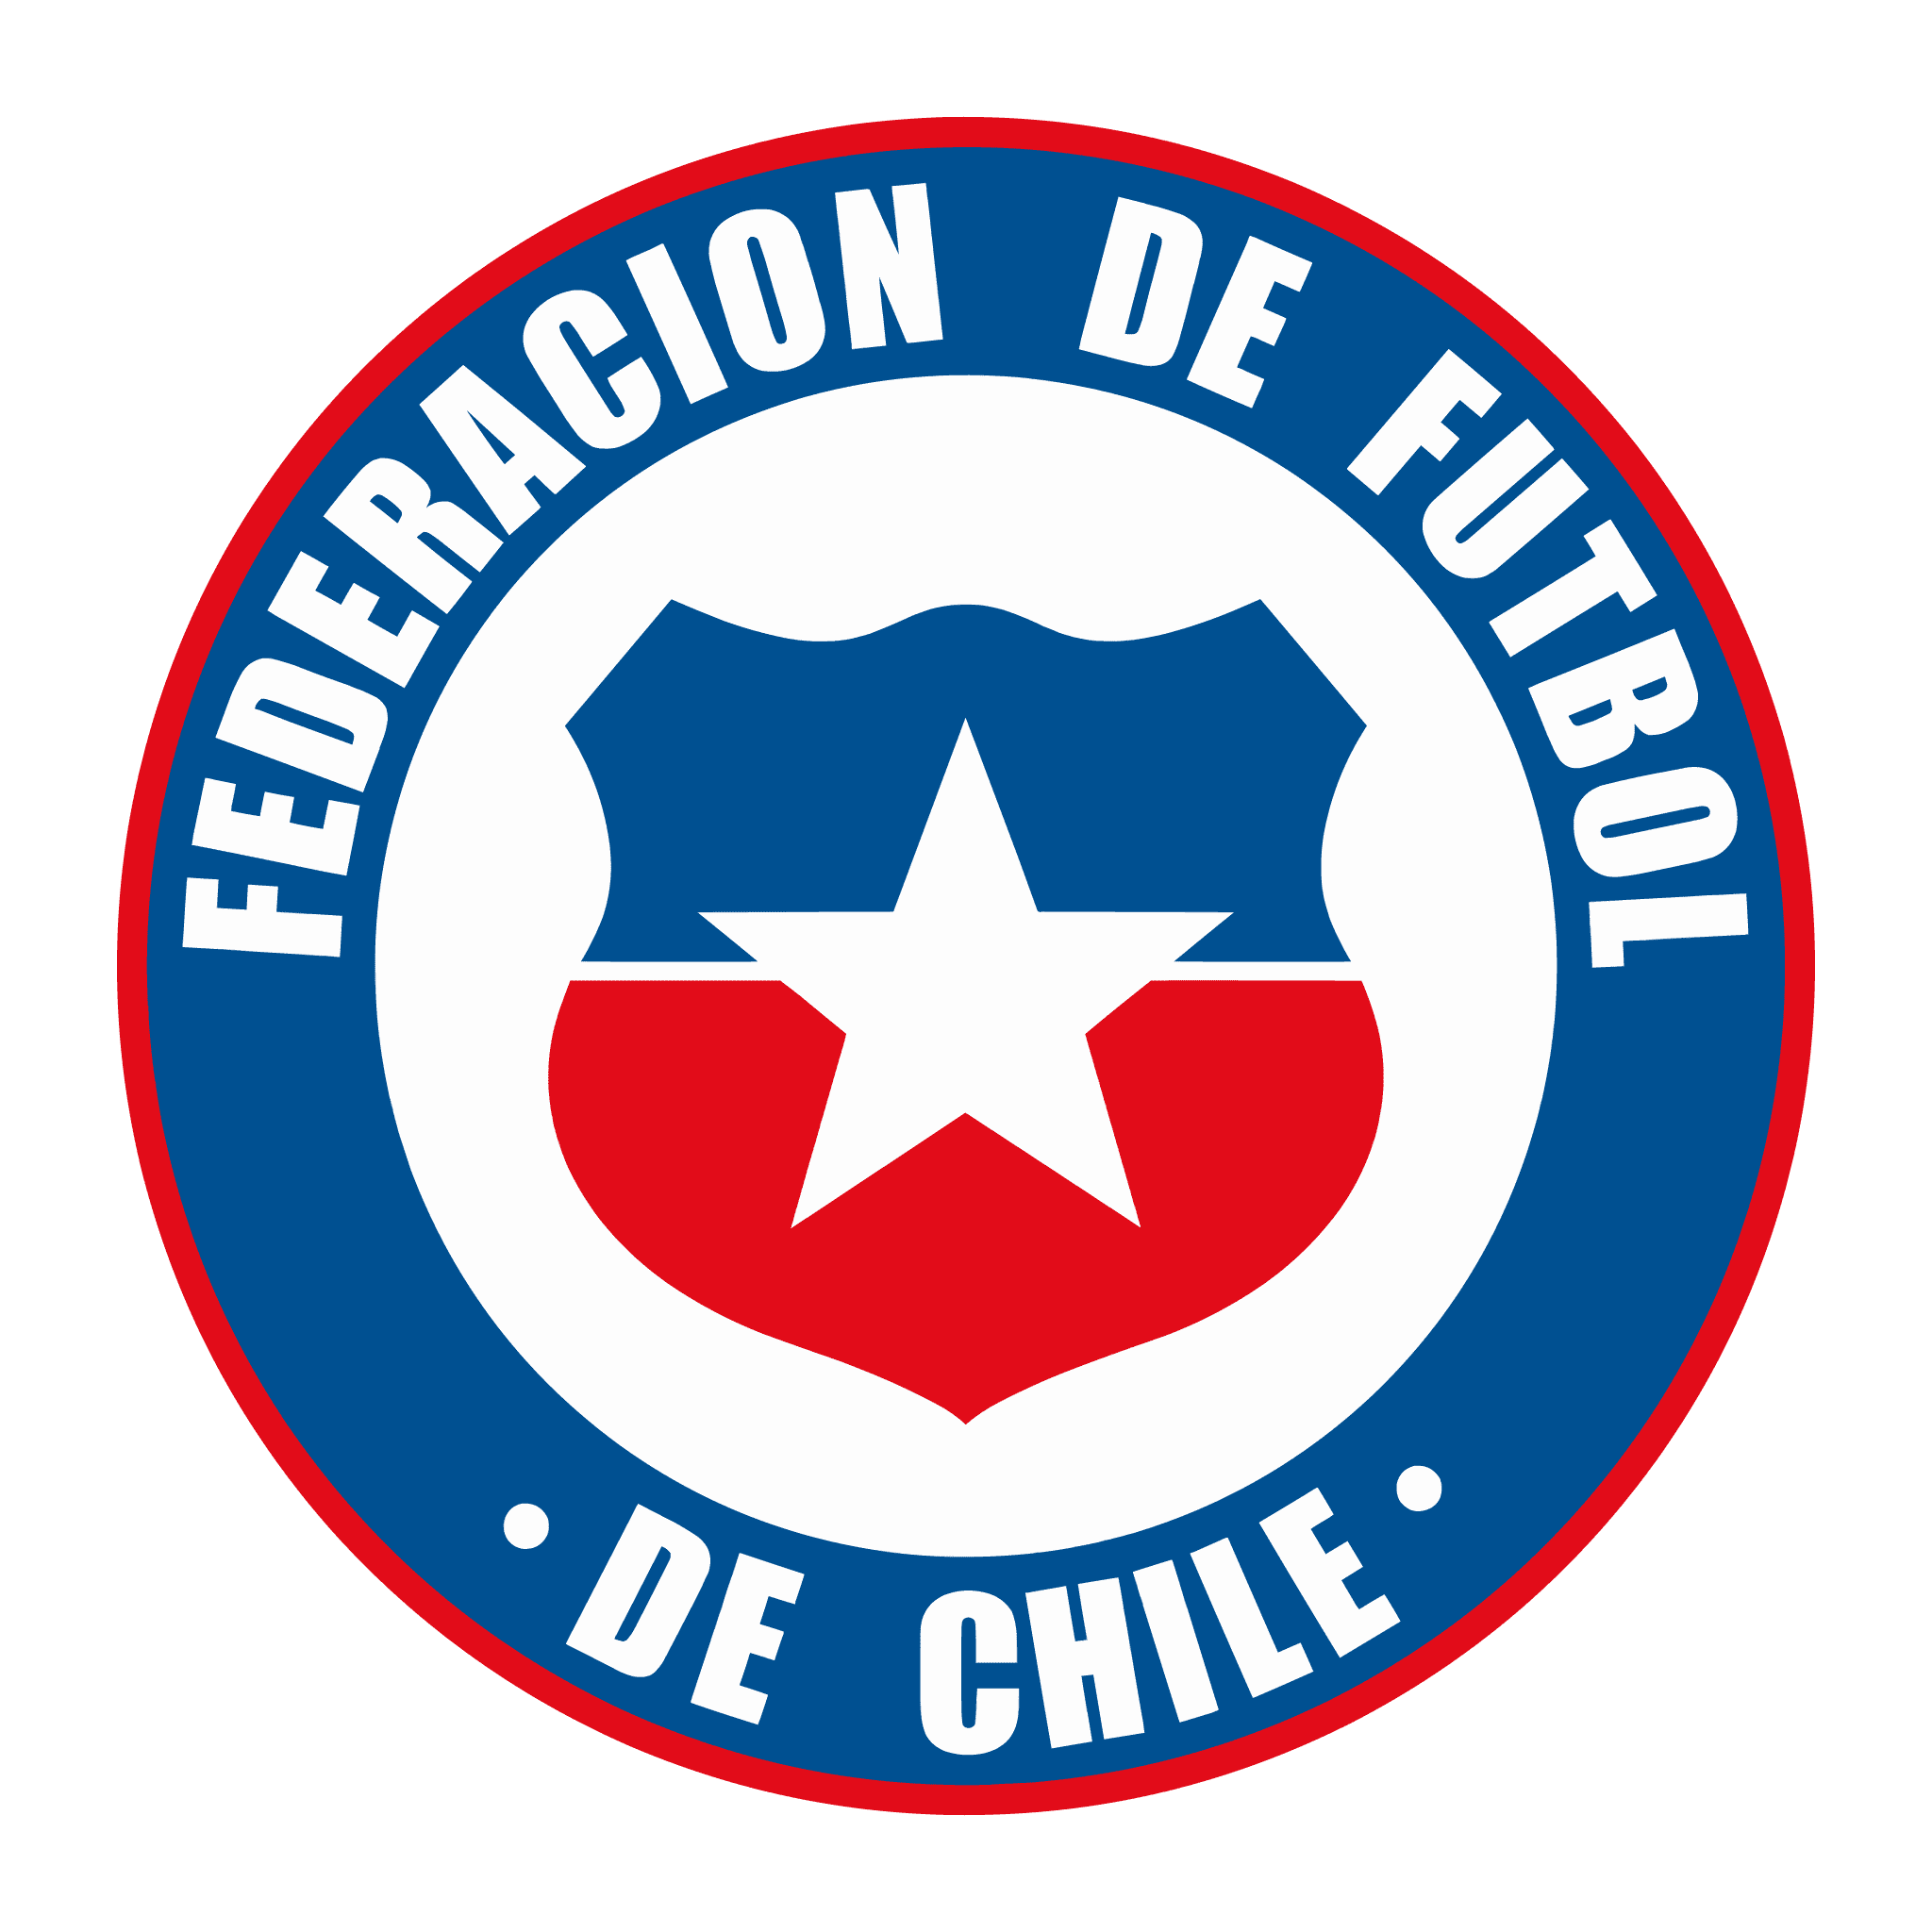 brasao do seleo chilena de futebol